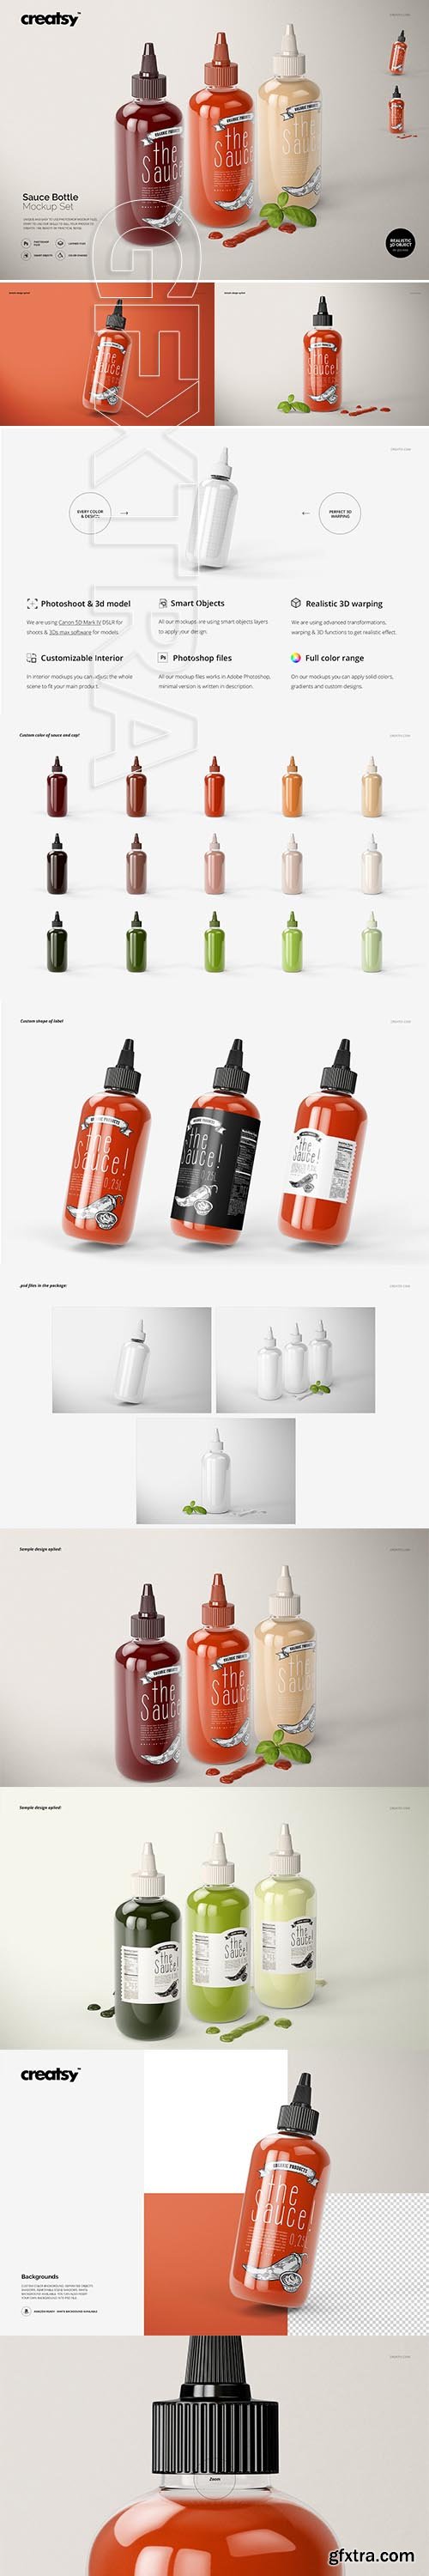 CreativeMarket - Sauce Bottle Mockup Set 3748185